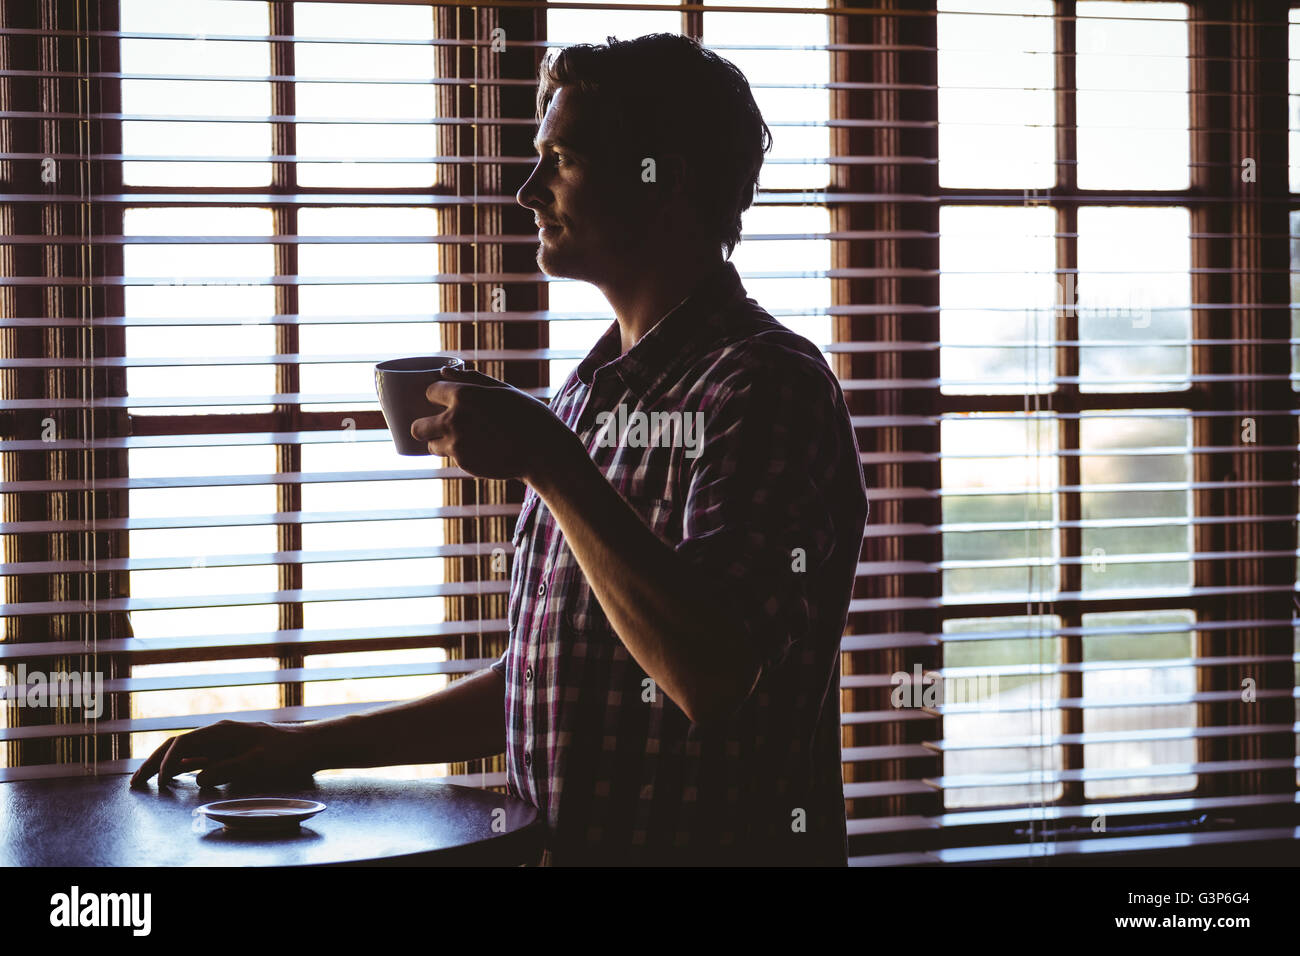 Man drinking alone a coffee Stock Photo